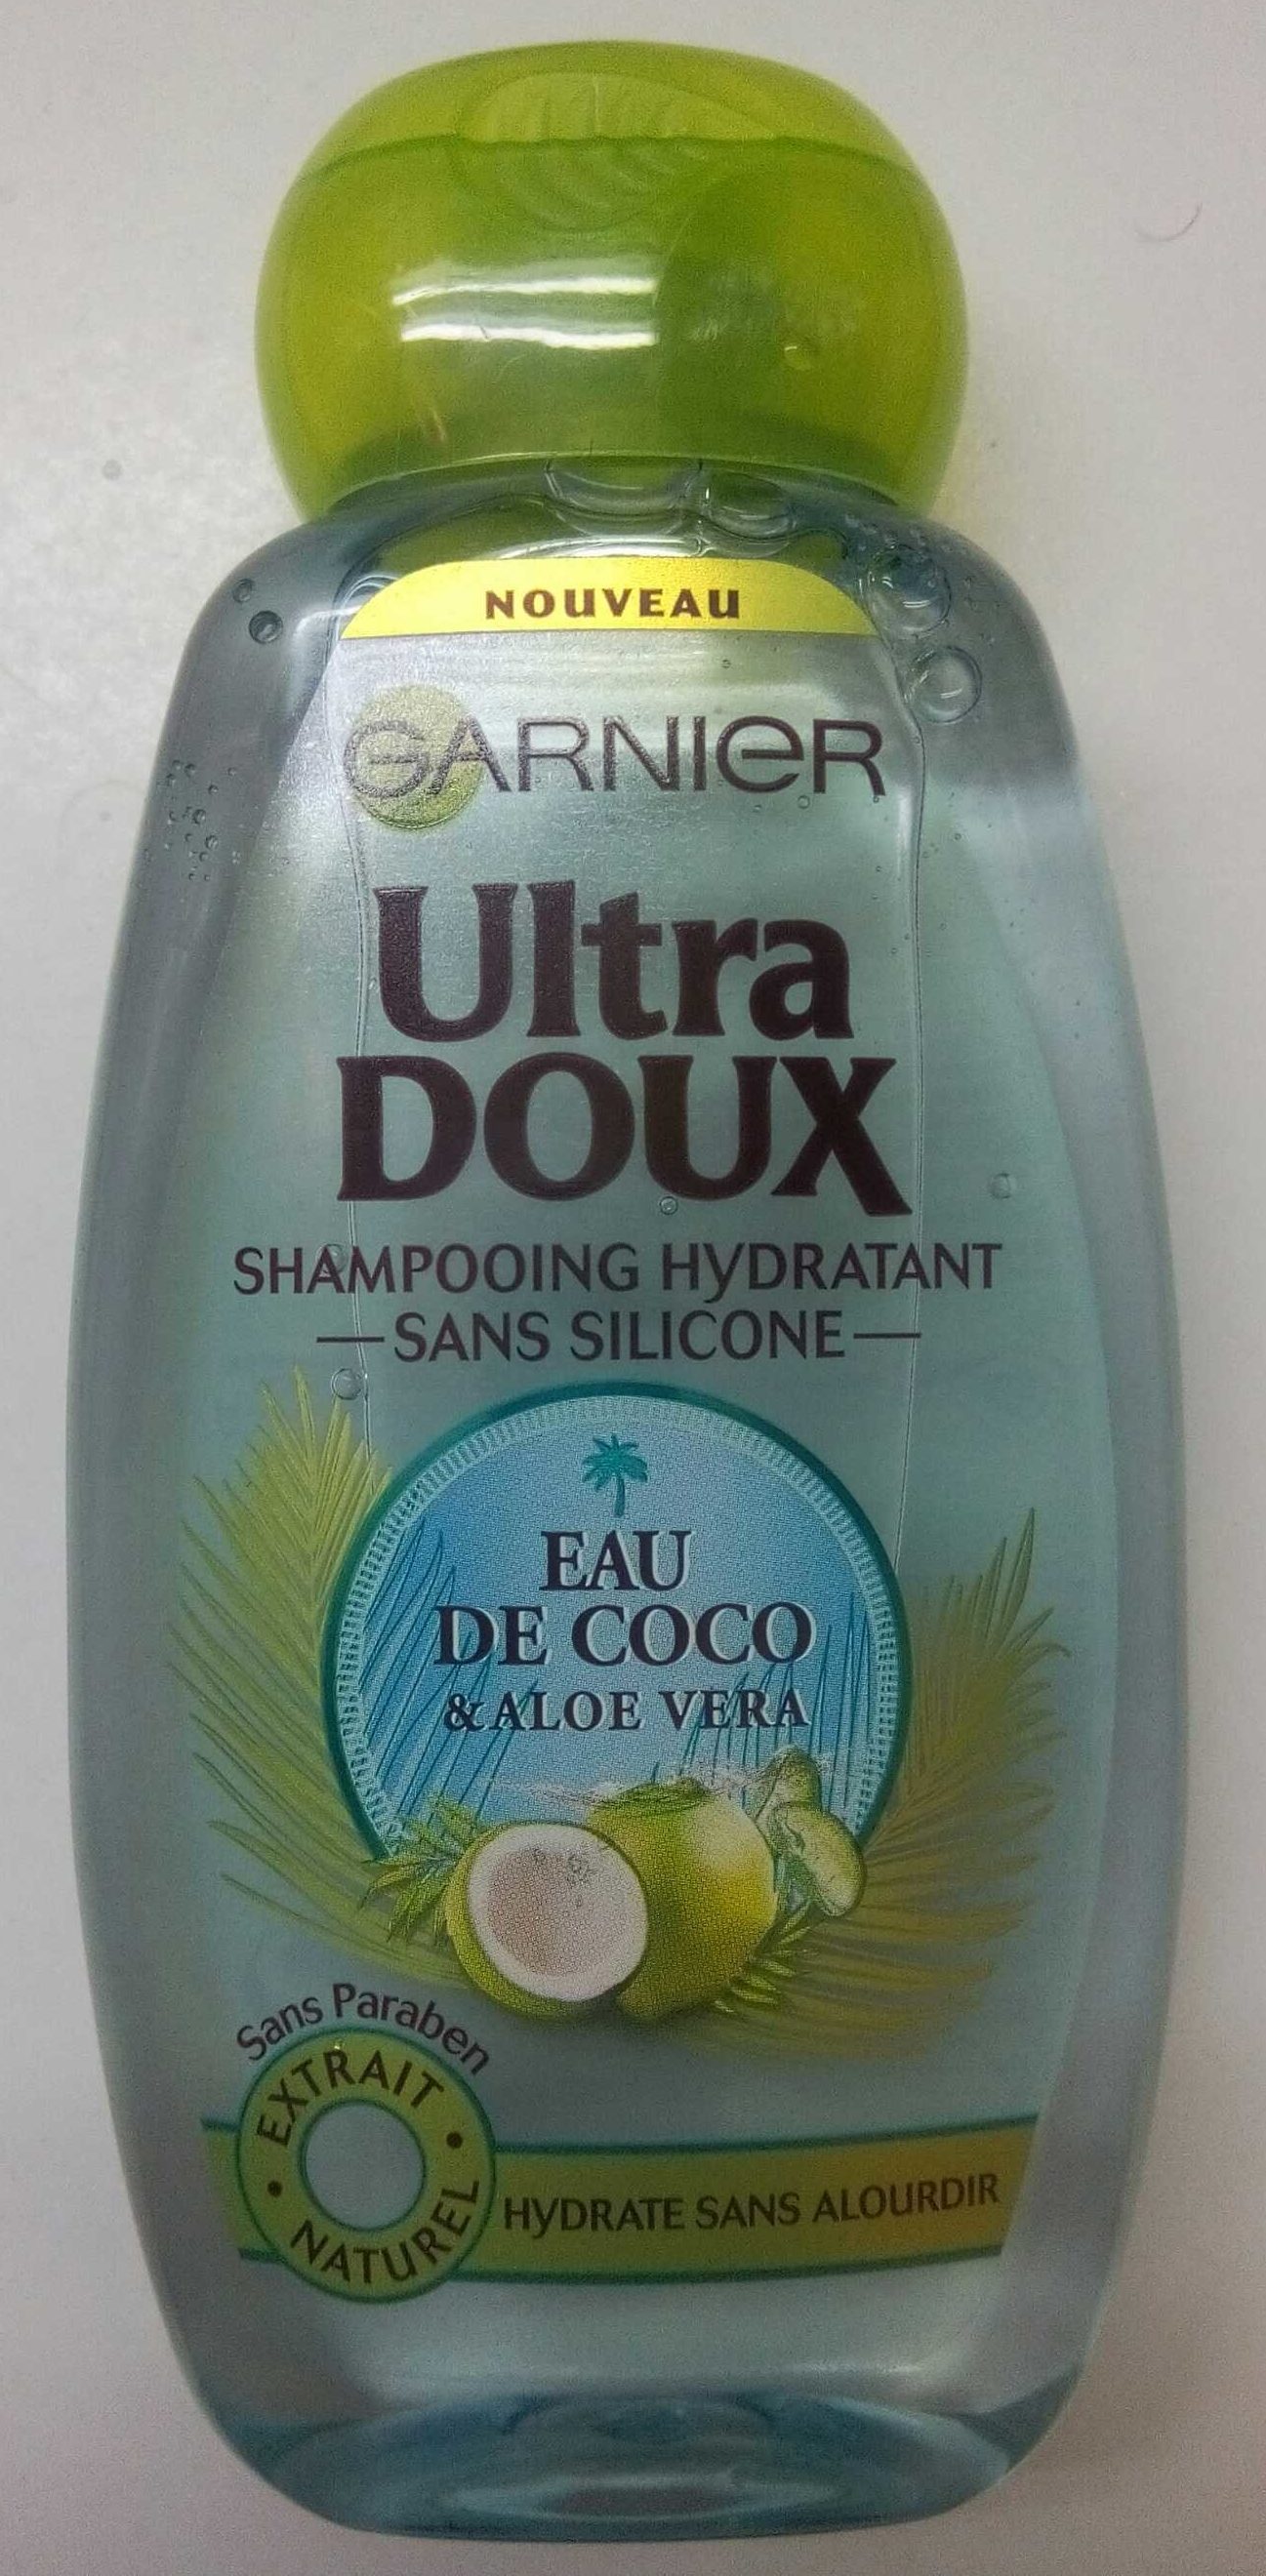 Ultra doux shampoing hydratant - Produit - fr